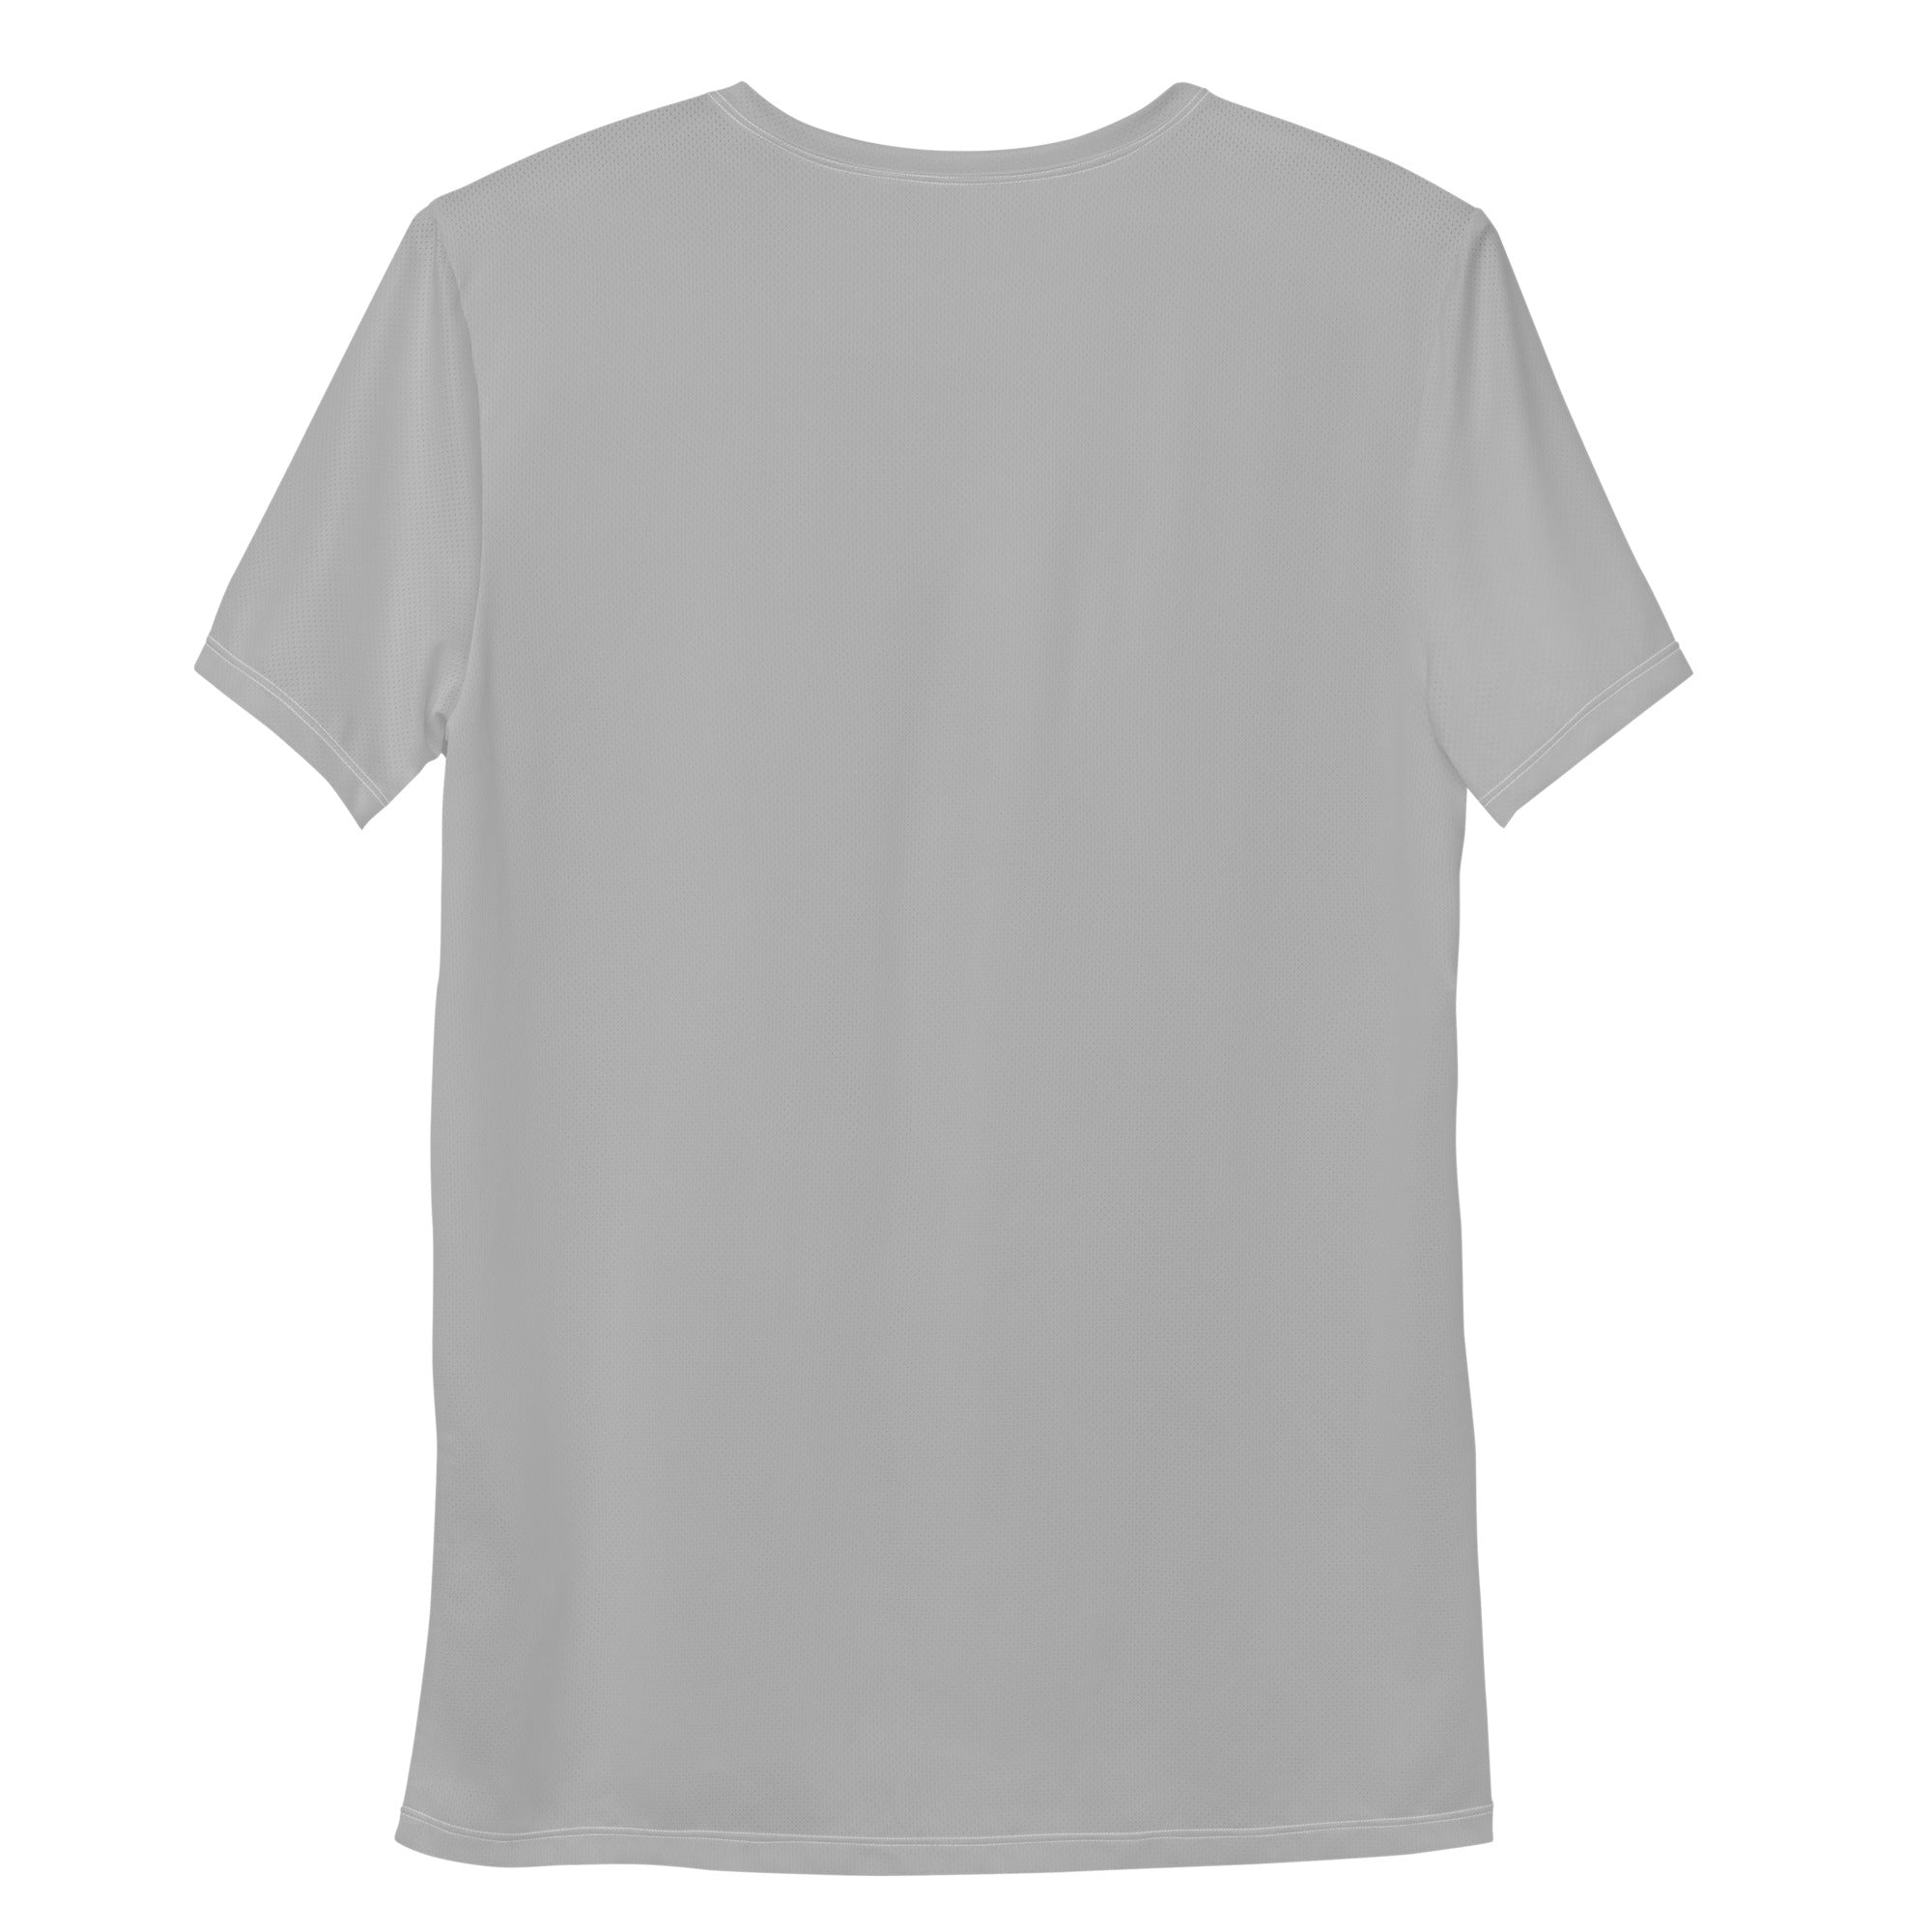 D54 Performance Short Sleeve Shirt Men's Athletic T-shirt